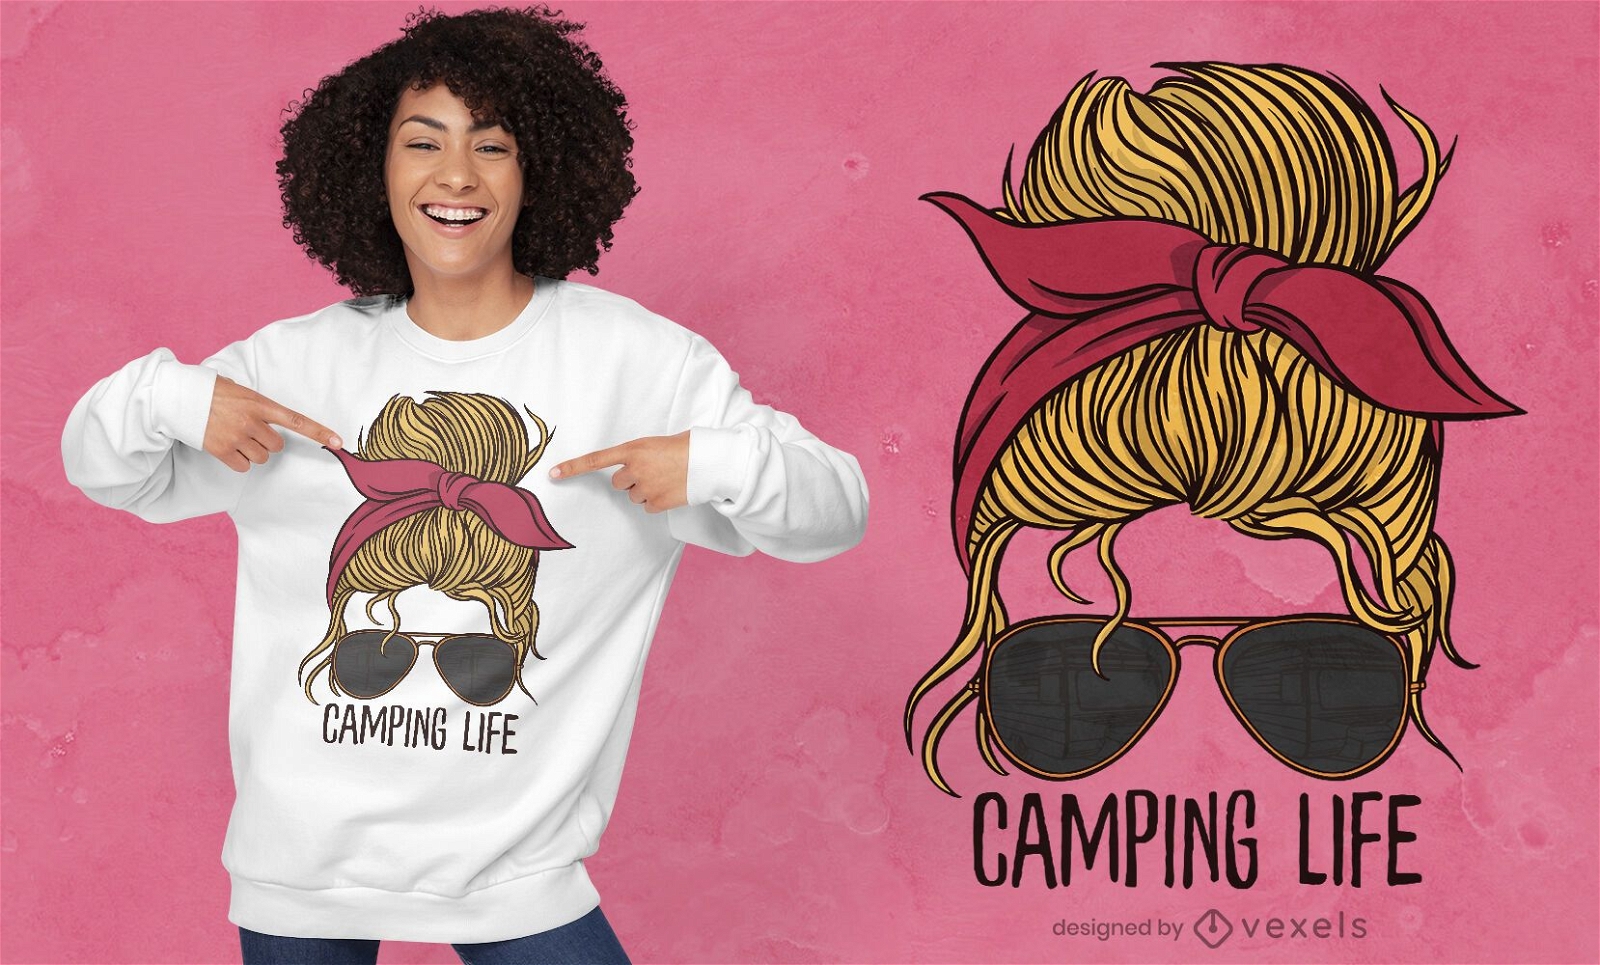 Camping life woman t-shirt design